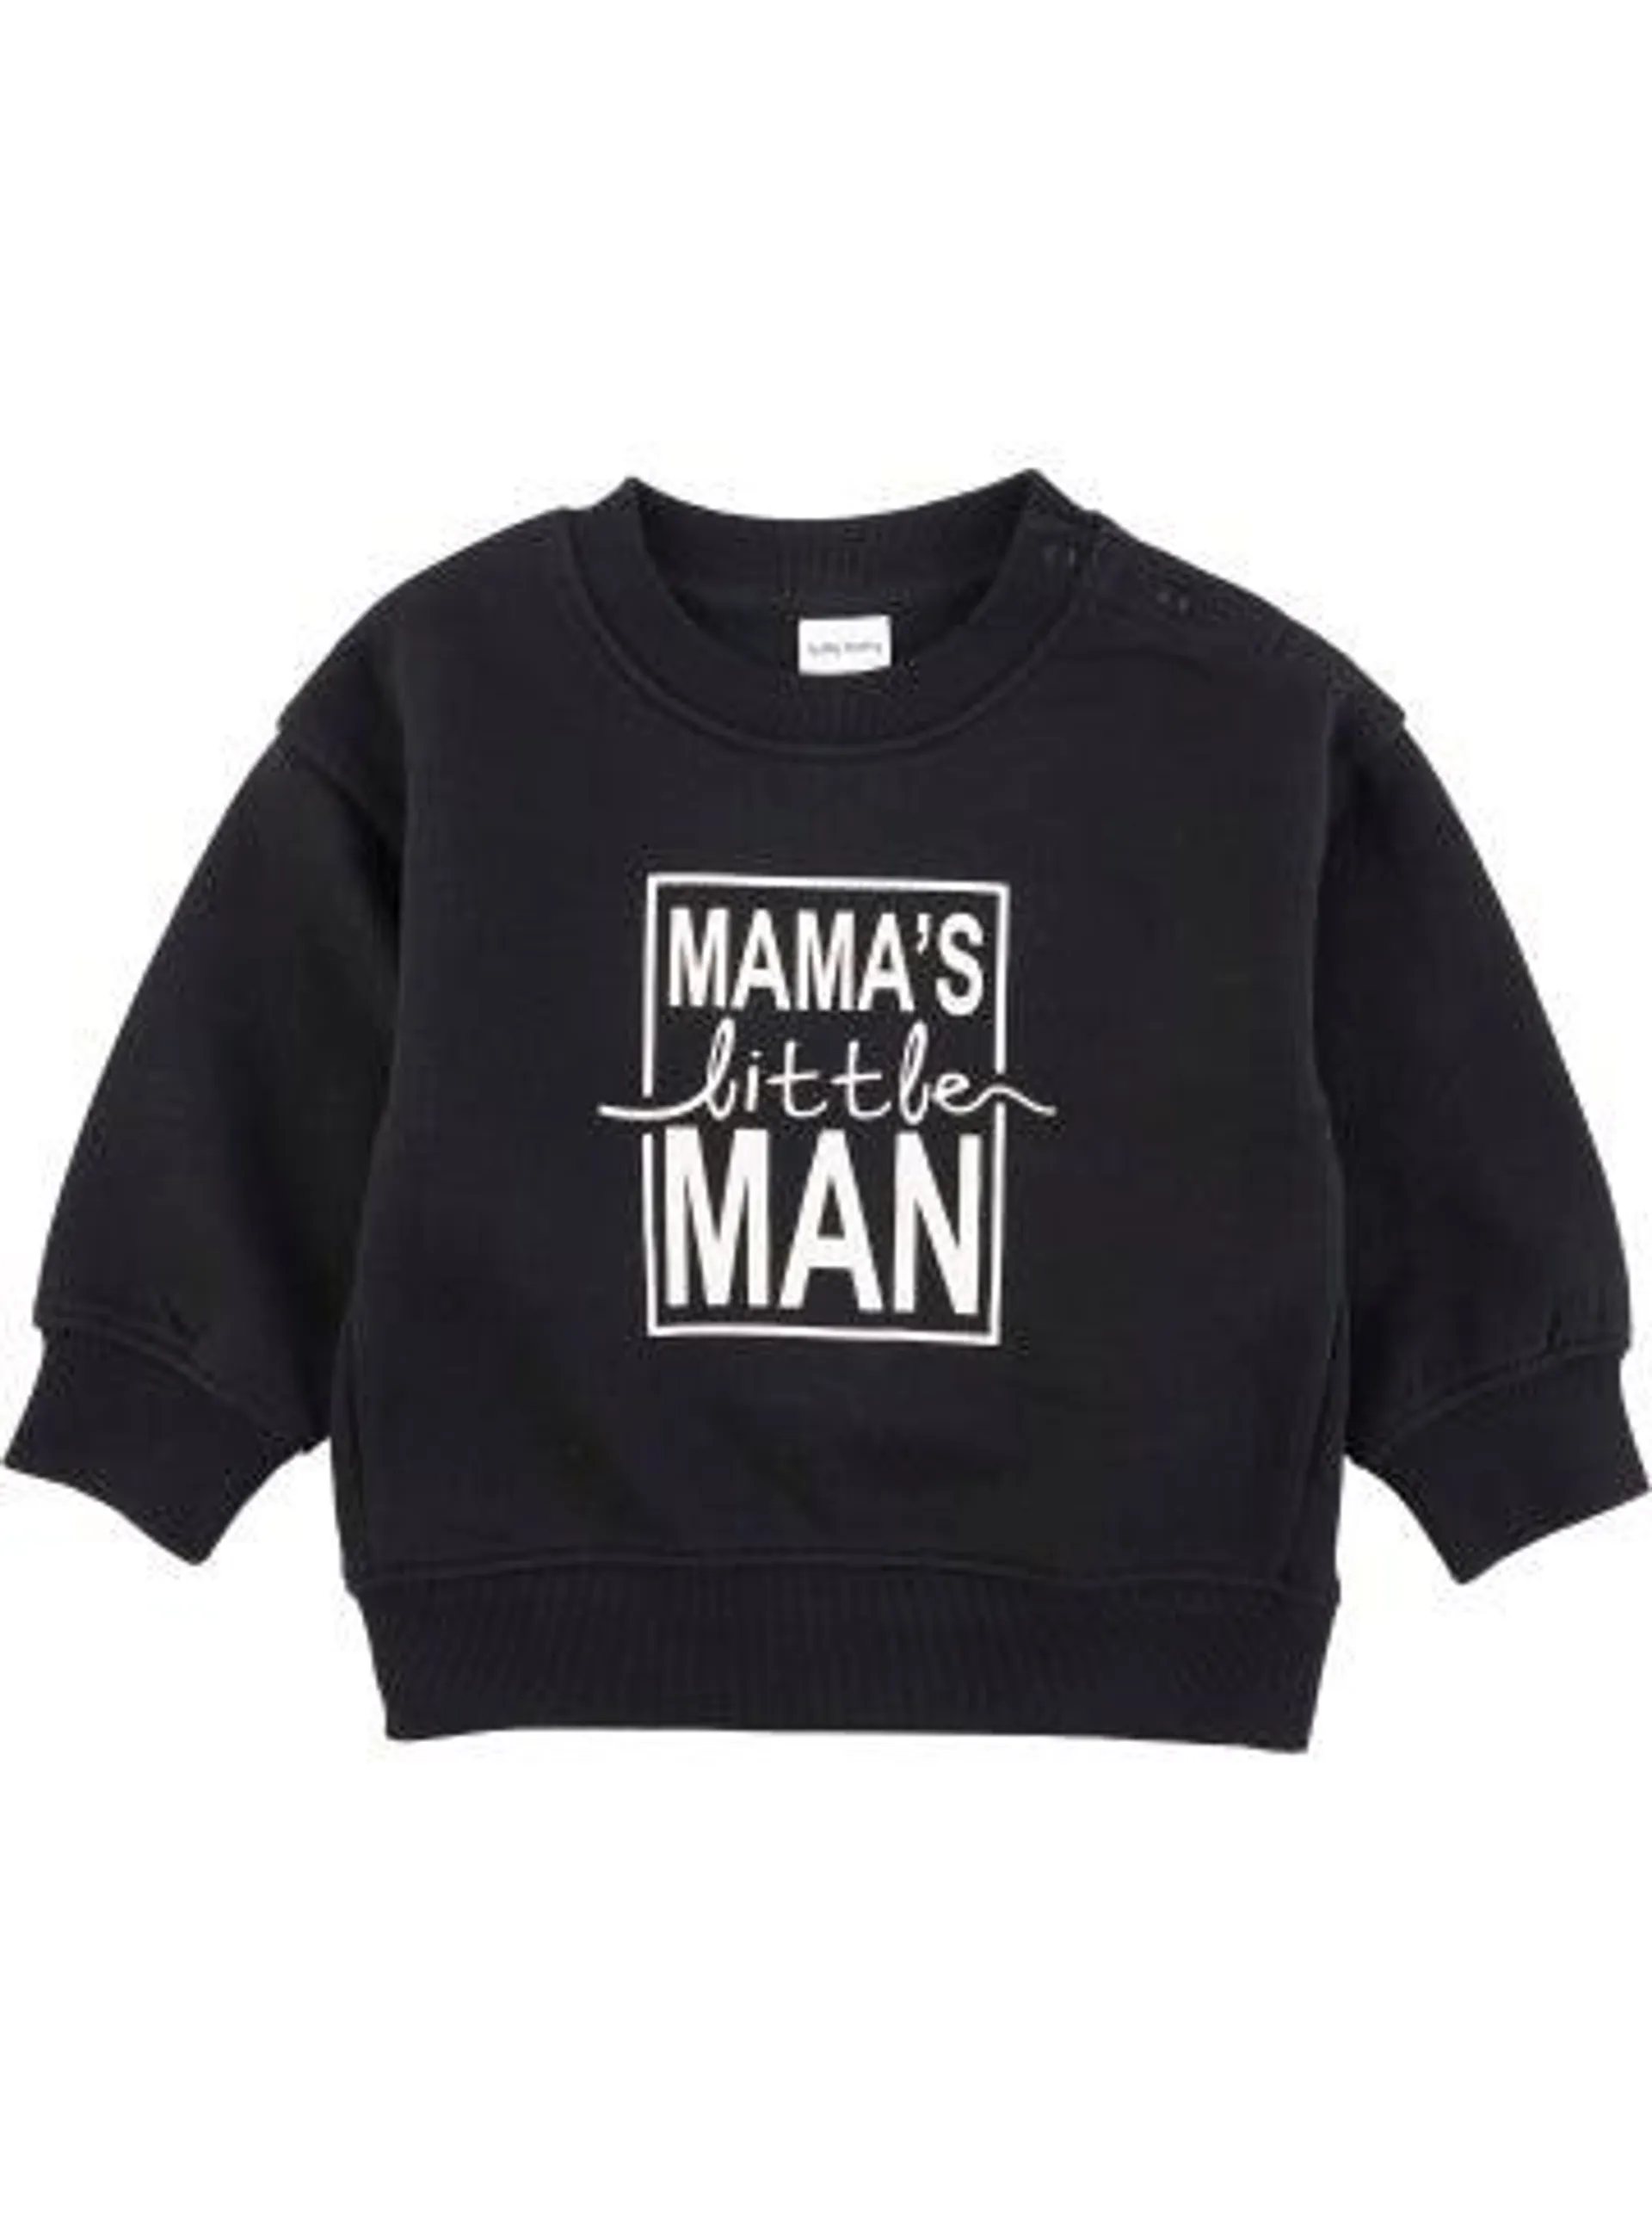 Babies' Slogan Sweatshirt in Black Slogan